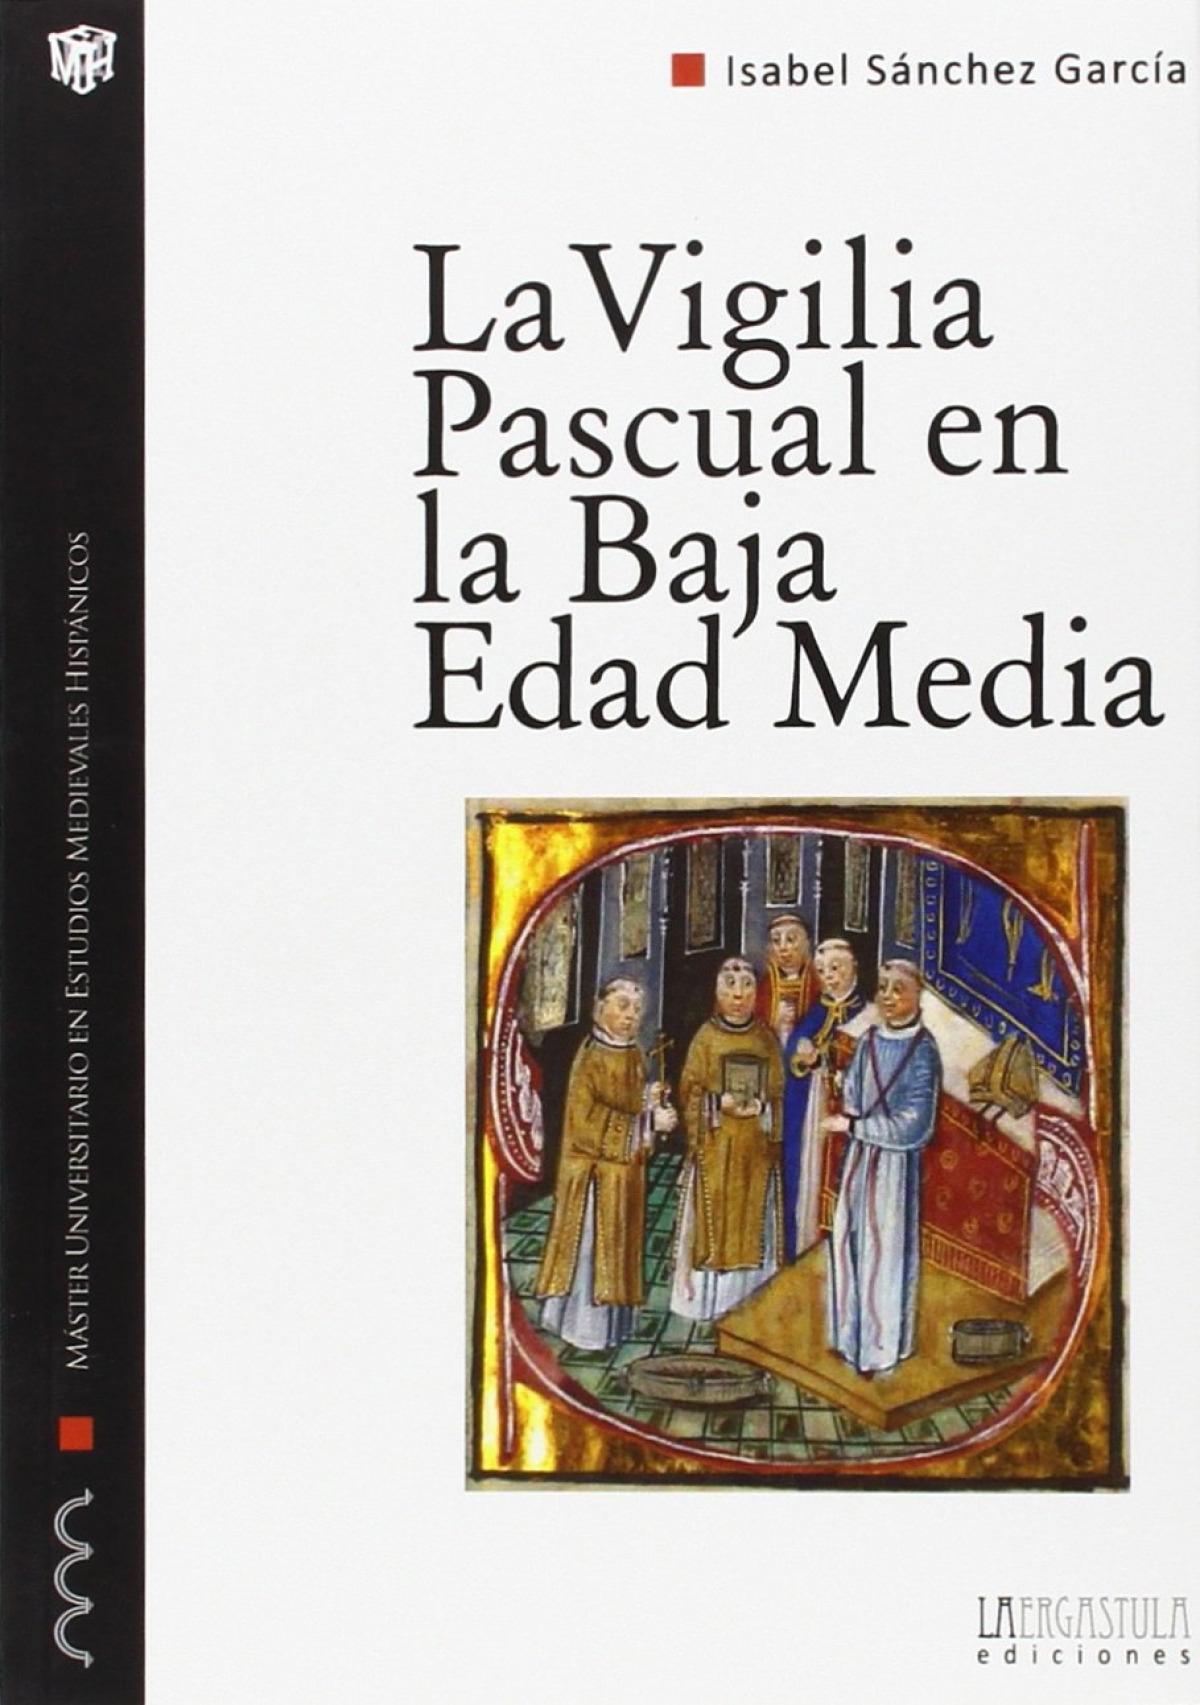 La Vigilia Pascual en la Baja Edad Media